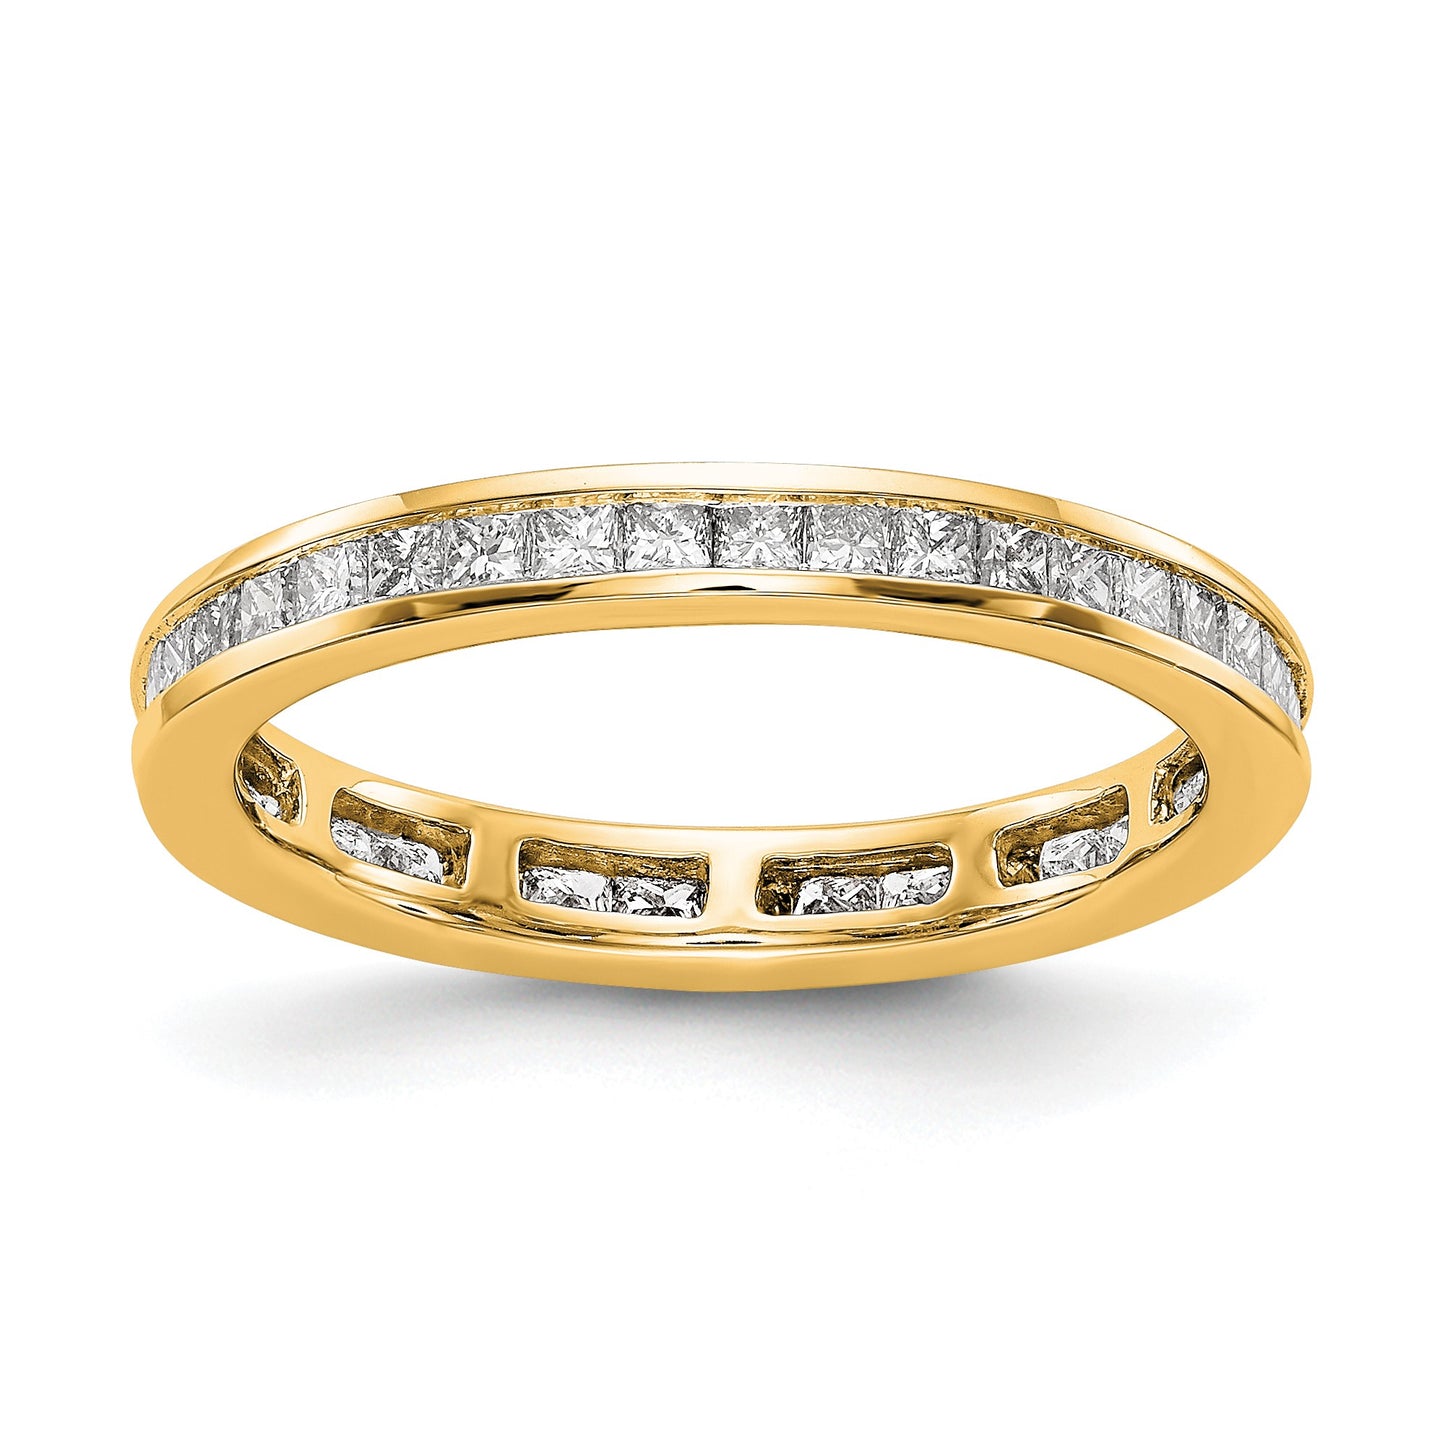 1ct Channel Set Princess Cut Diamond Eternity Wedding Band Ring 14k Yellow Gold